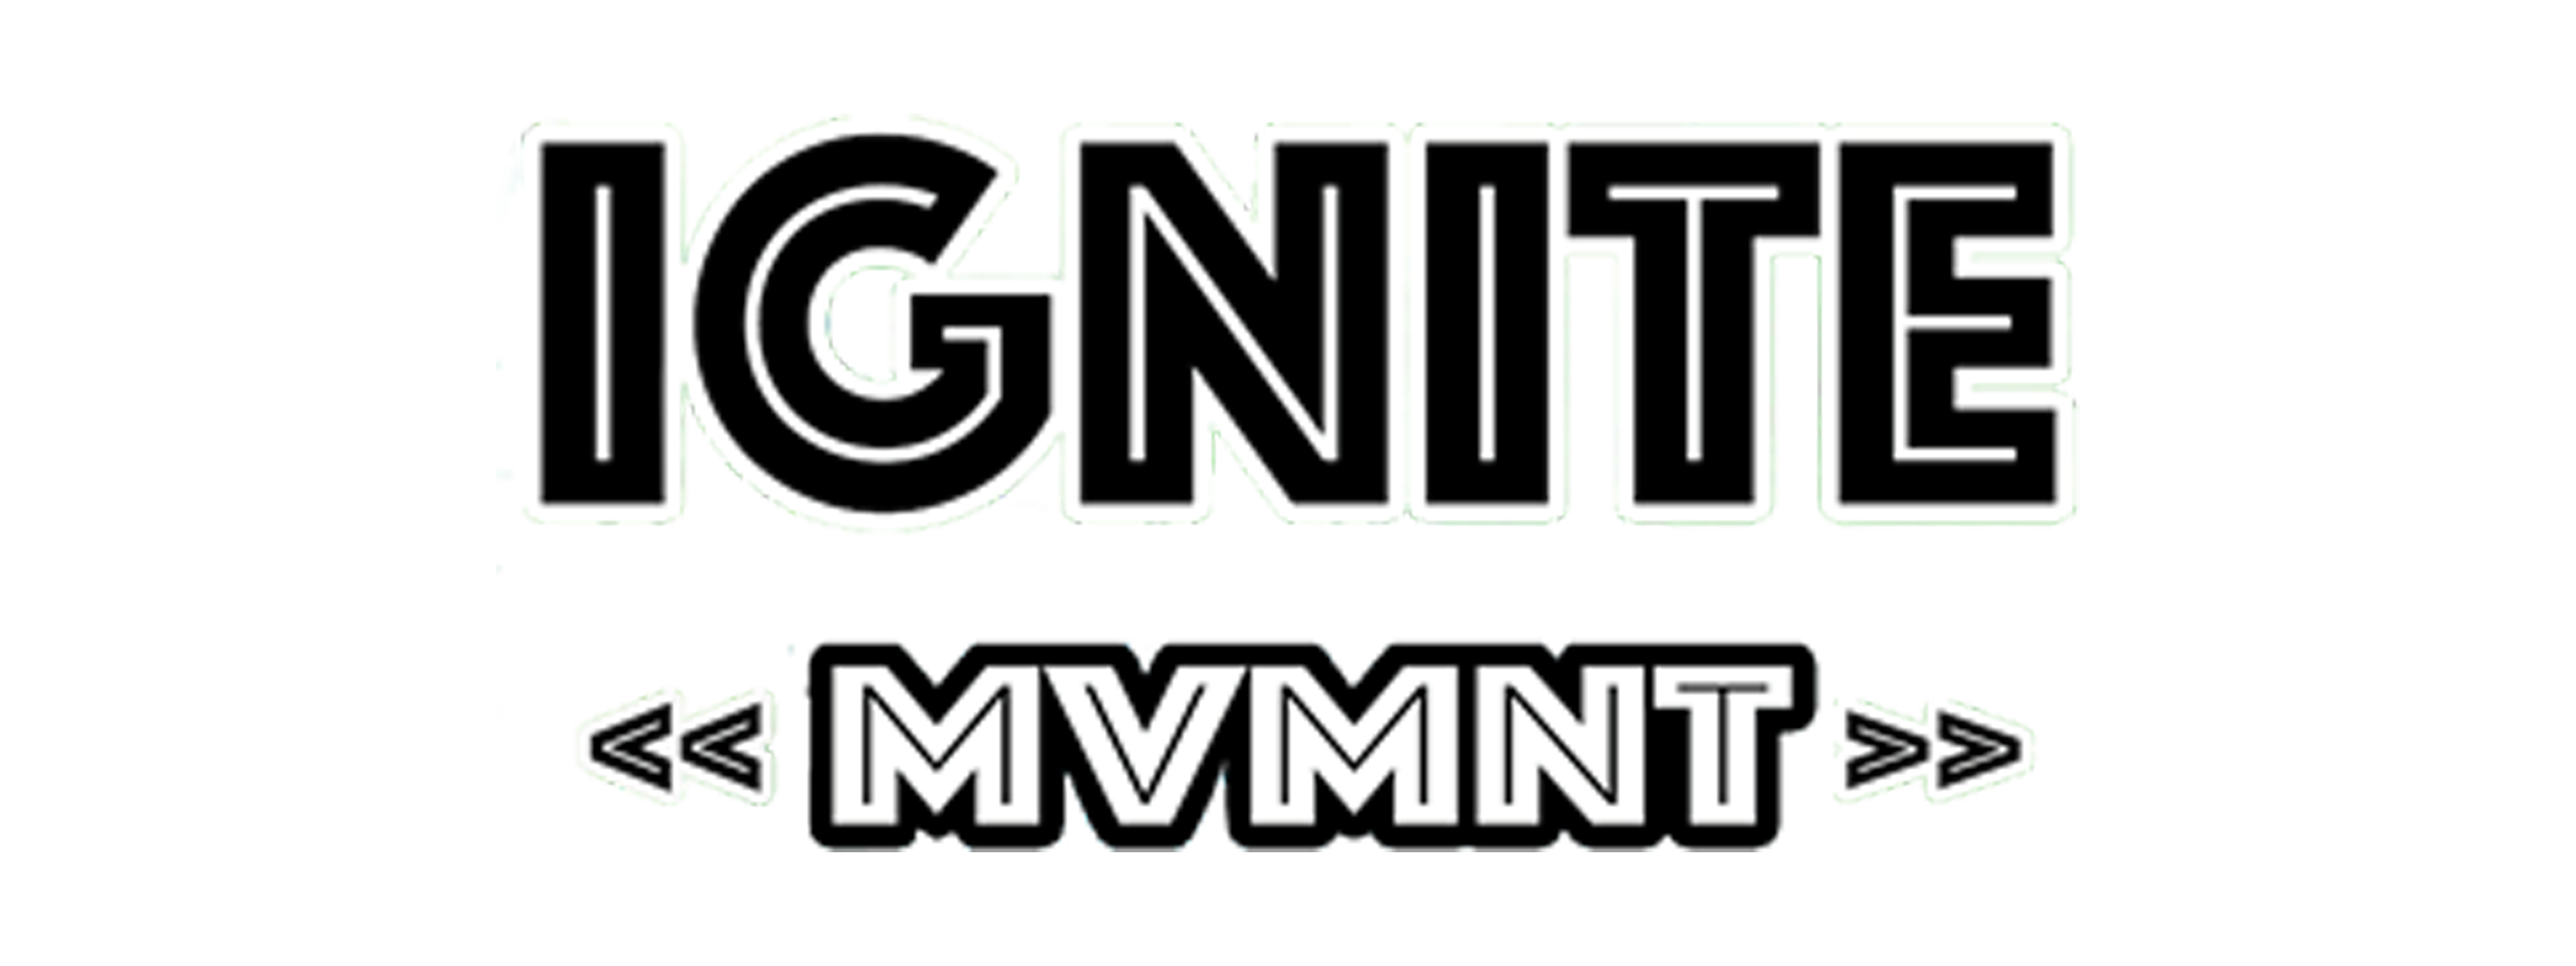 Afterbeat IGNITE Logo 2020